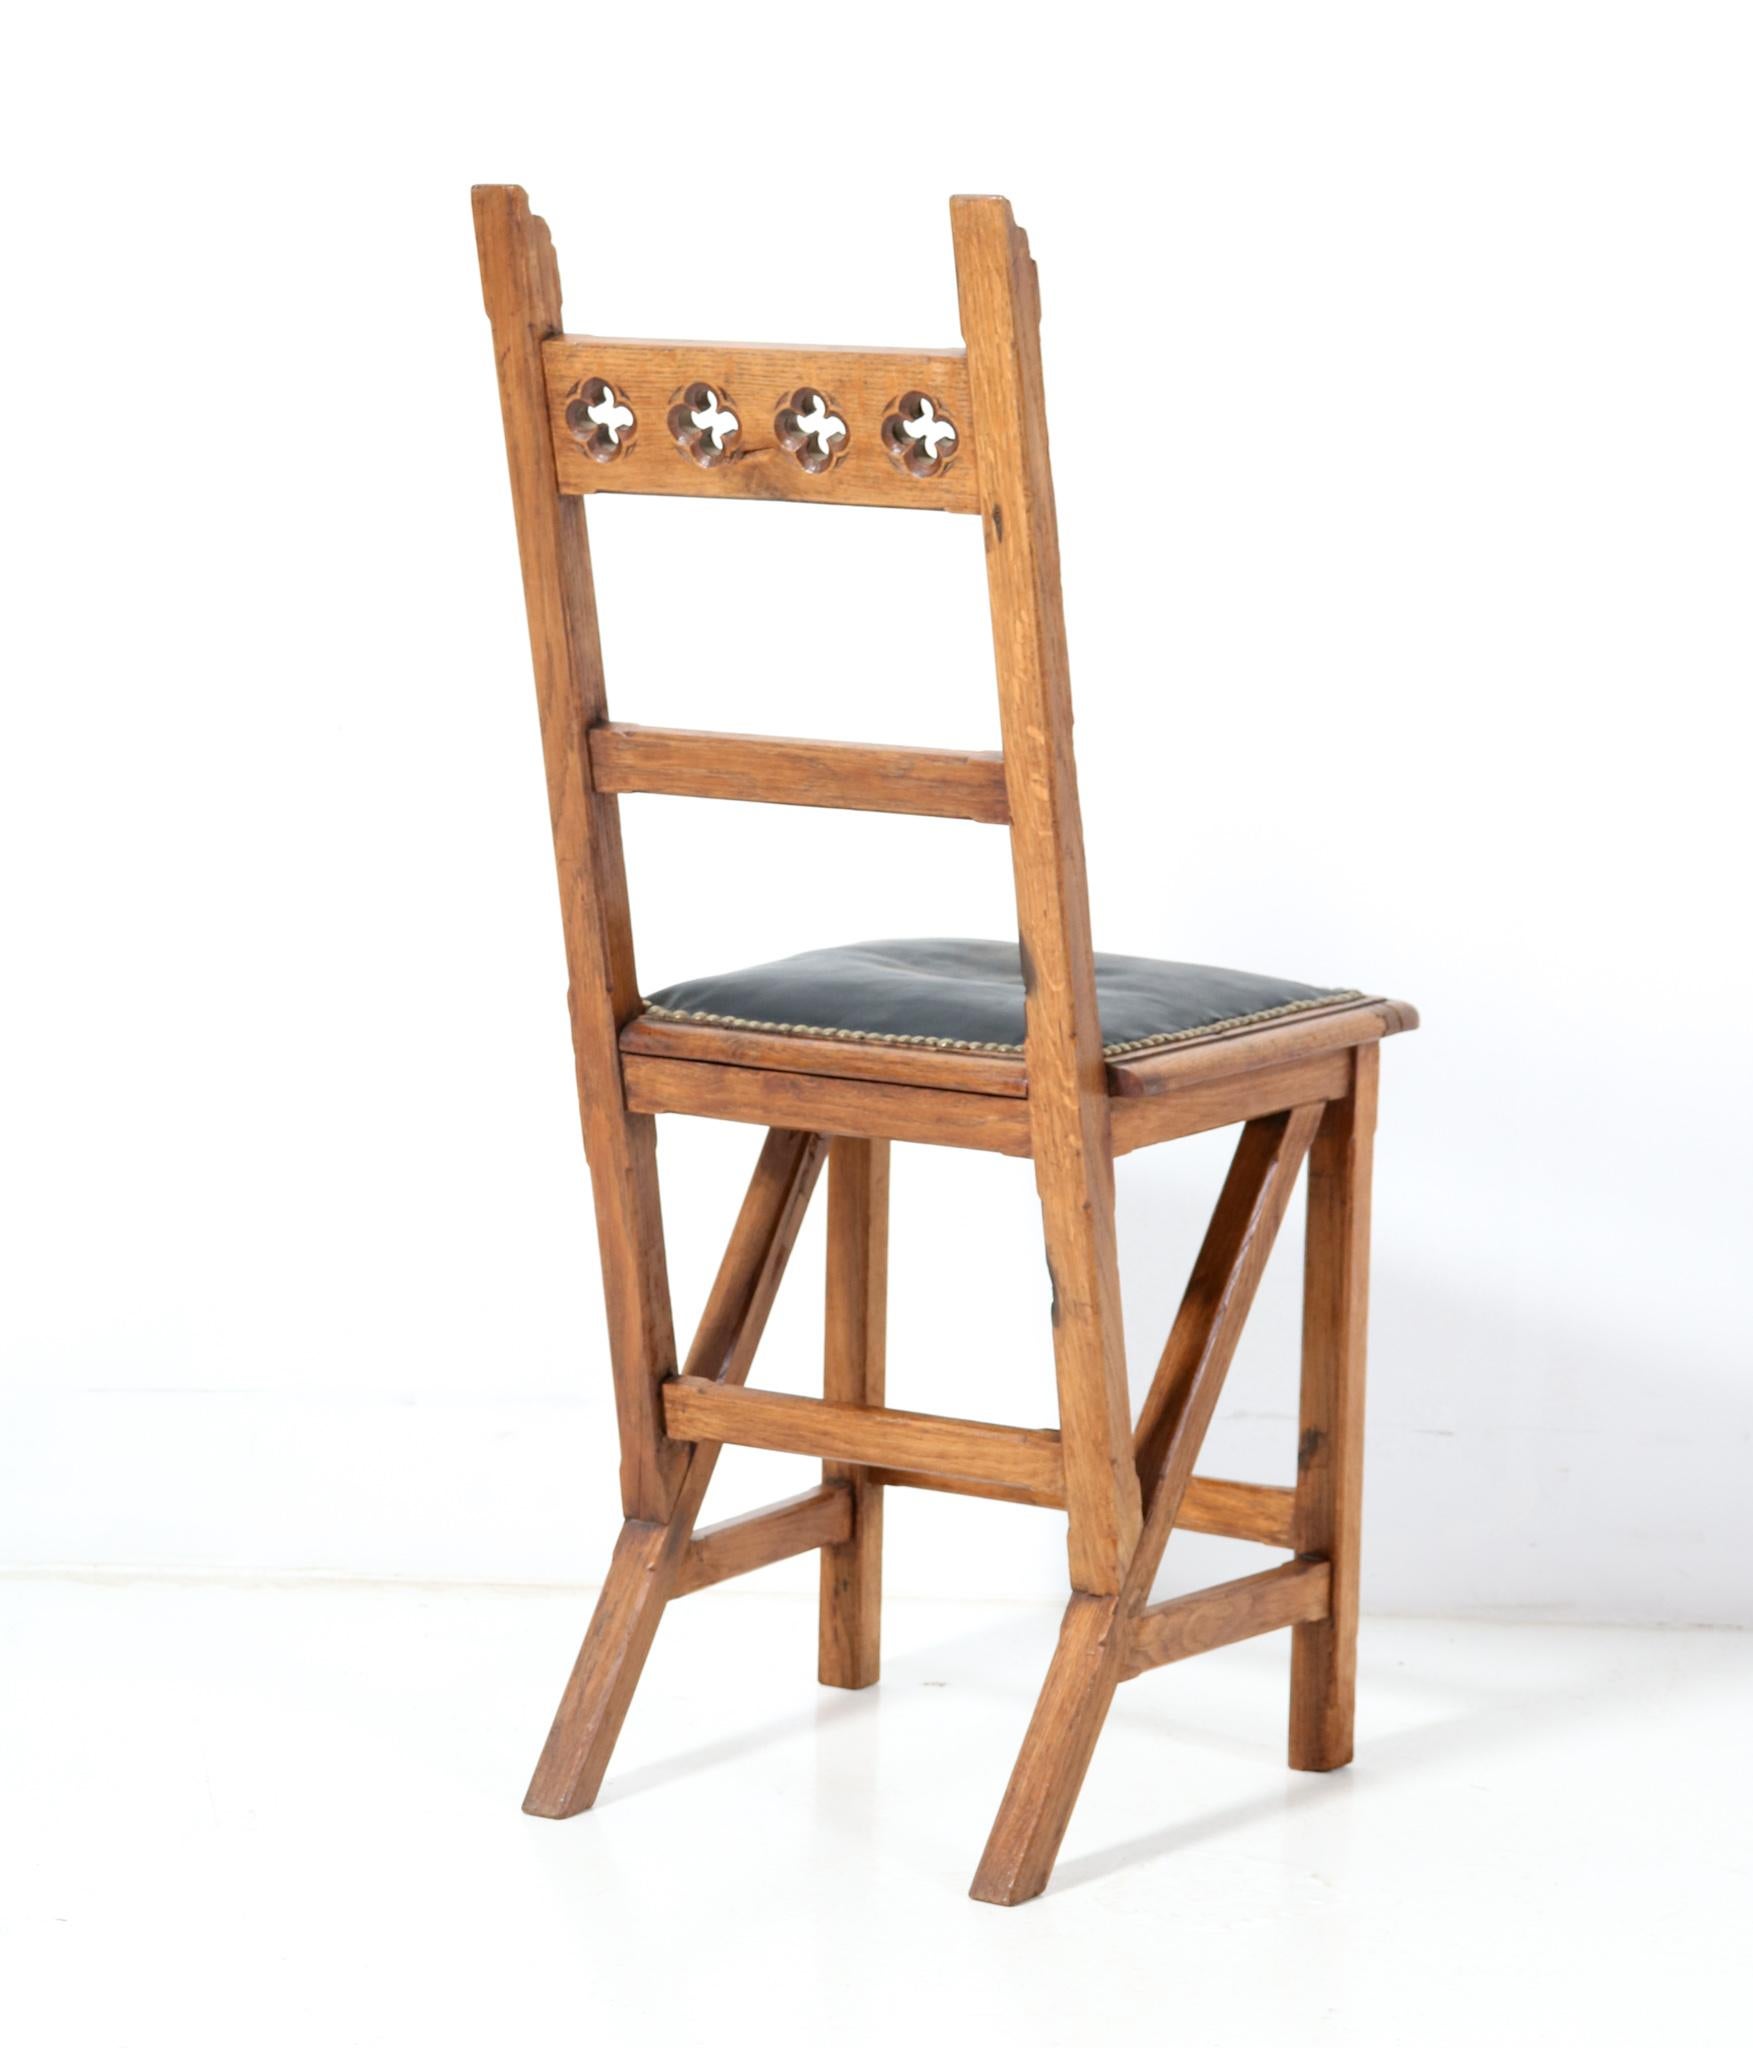 Early 20th Century Oak Arts & Crafts Art Nouveau Side Chair by Hendrik Petrus Berlage, 1900s For Sale